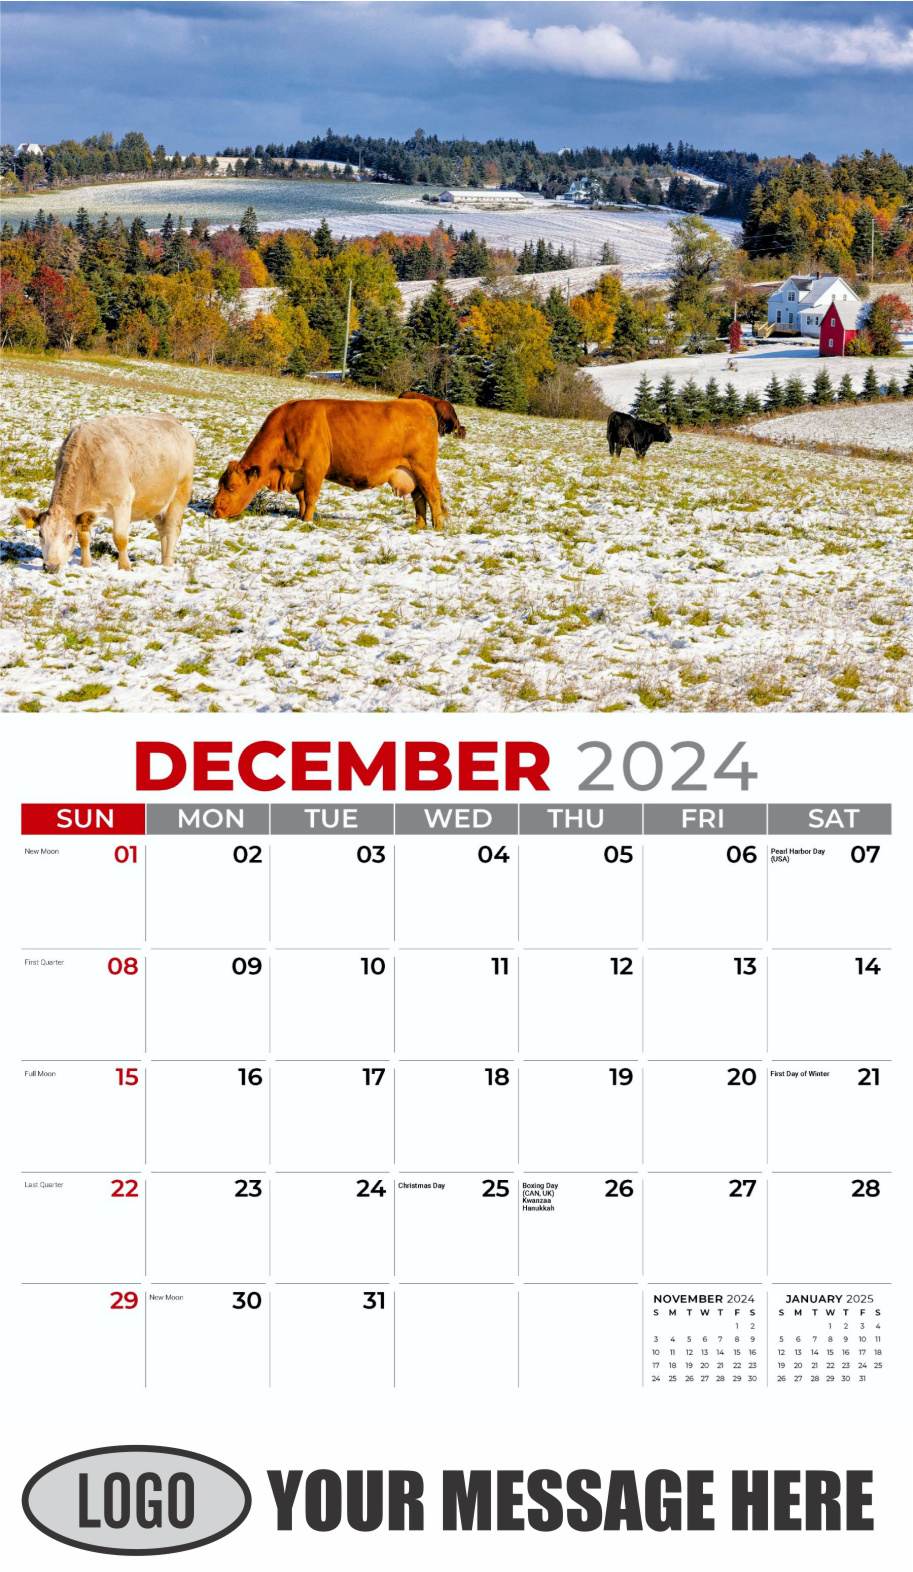 Country Spirit 2024 Business Advertising Calendar - December